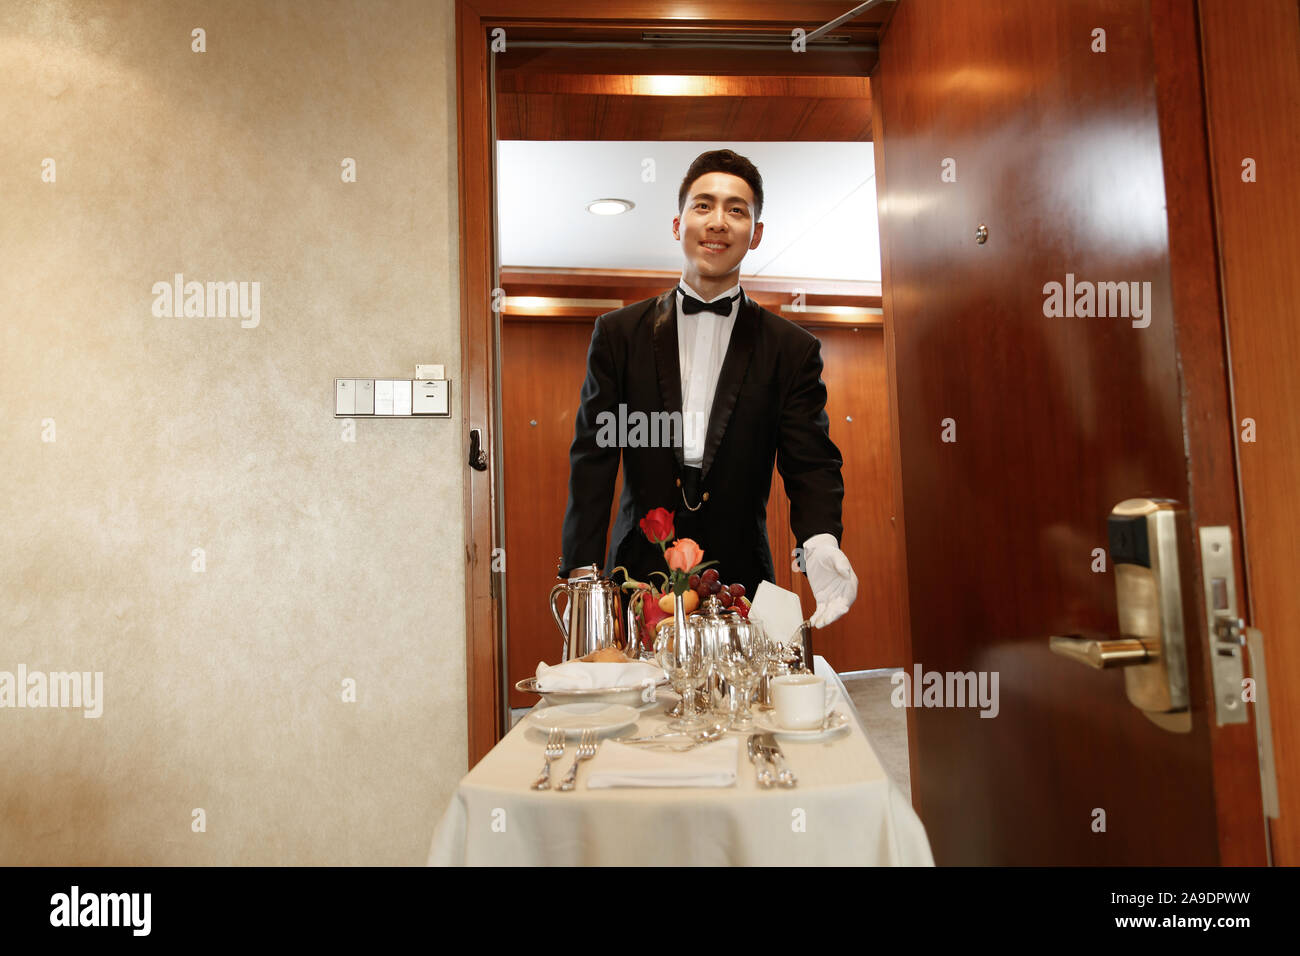 The hotel waiter Stock Photo